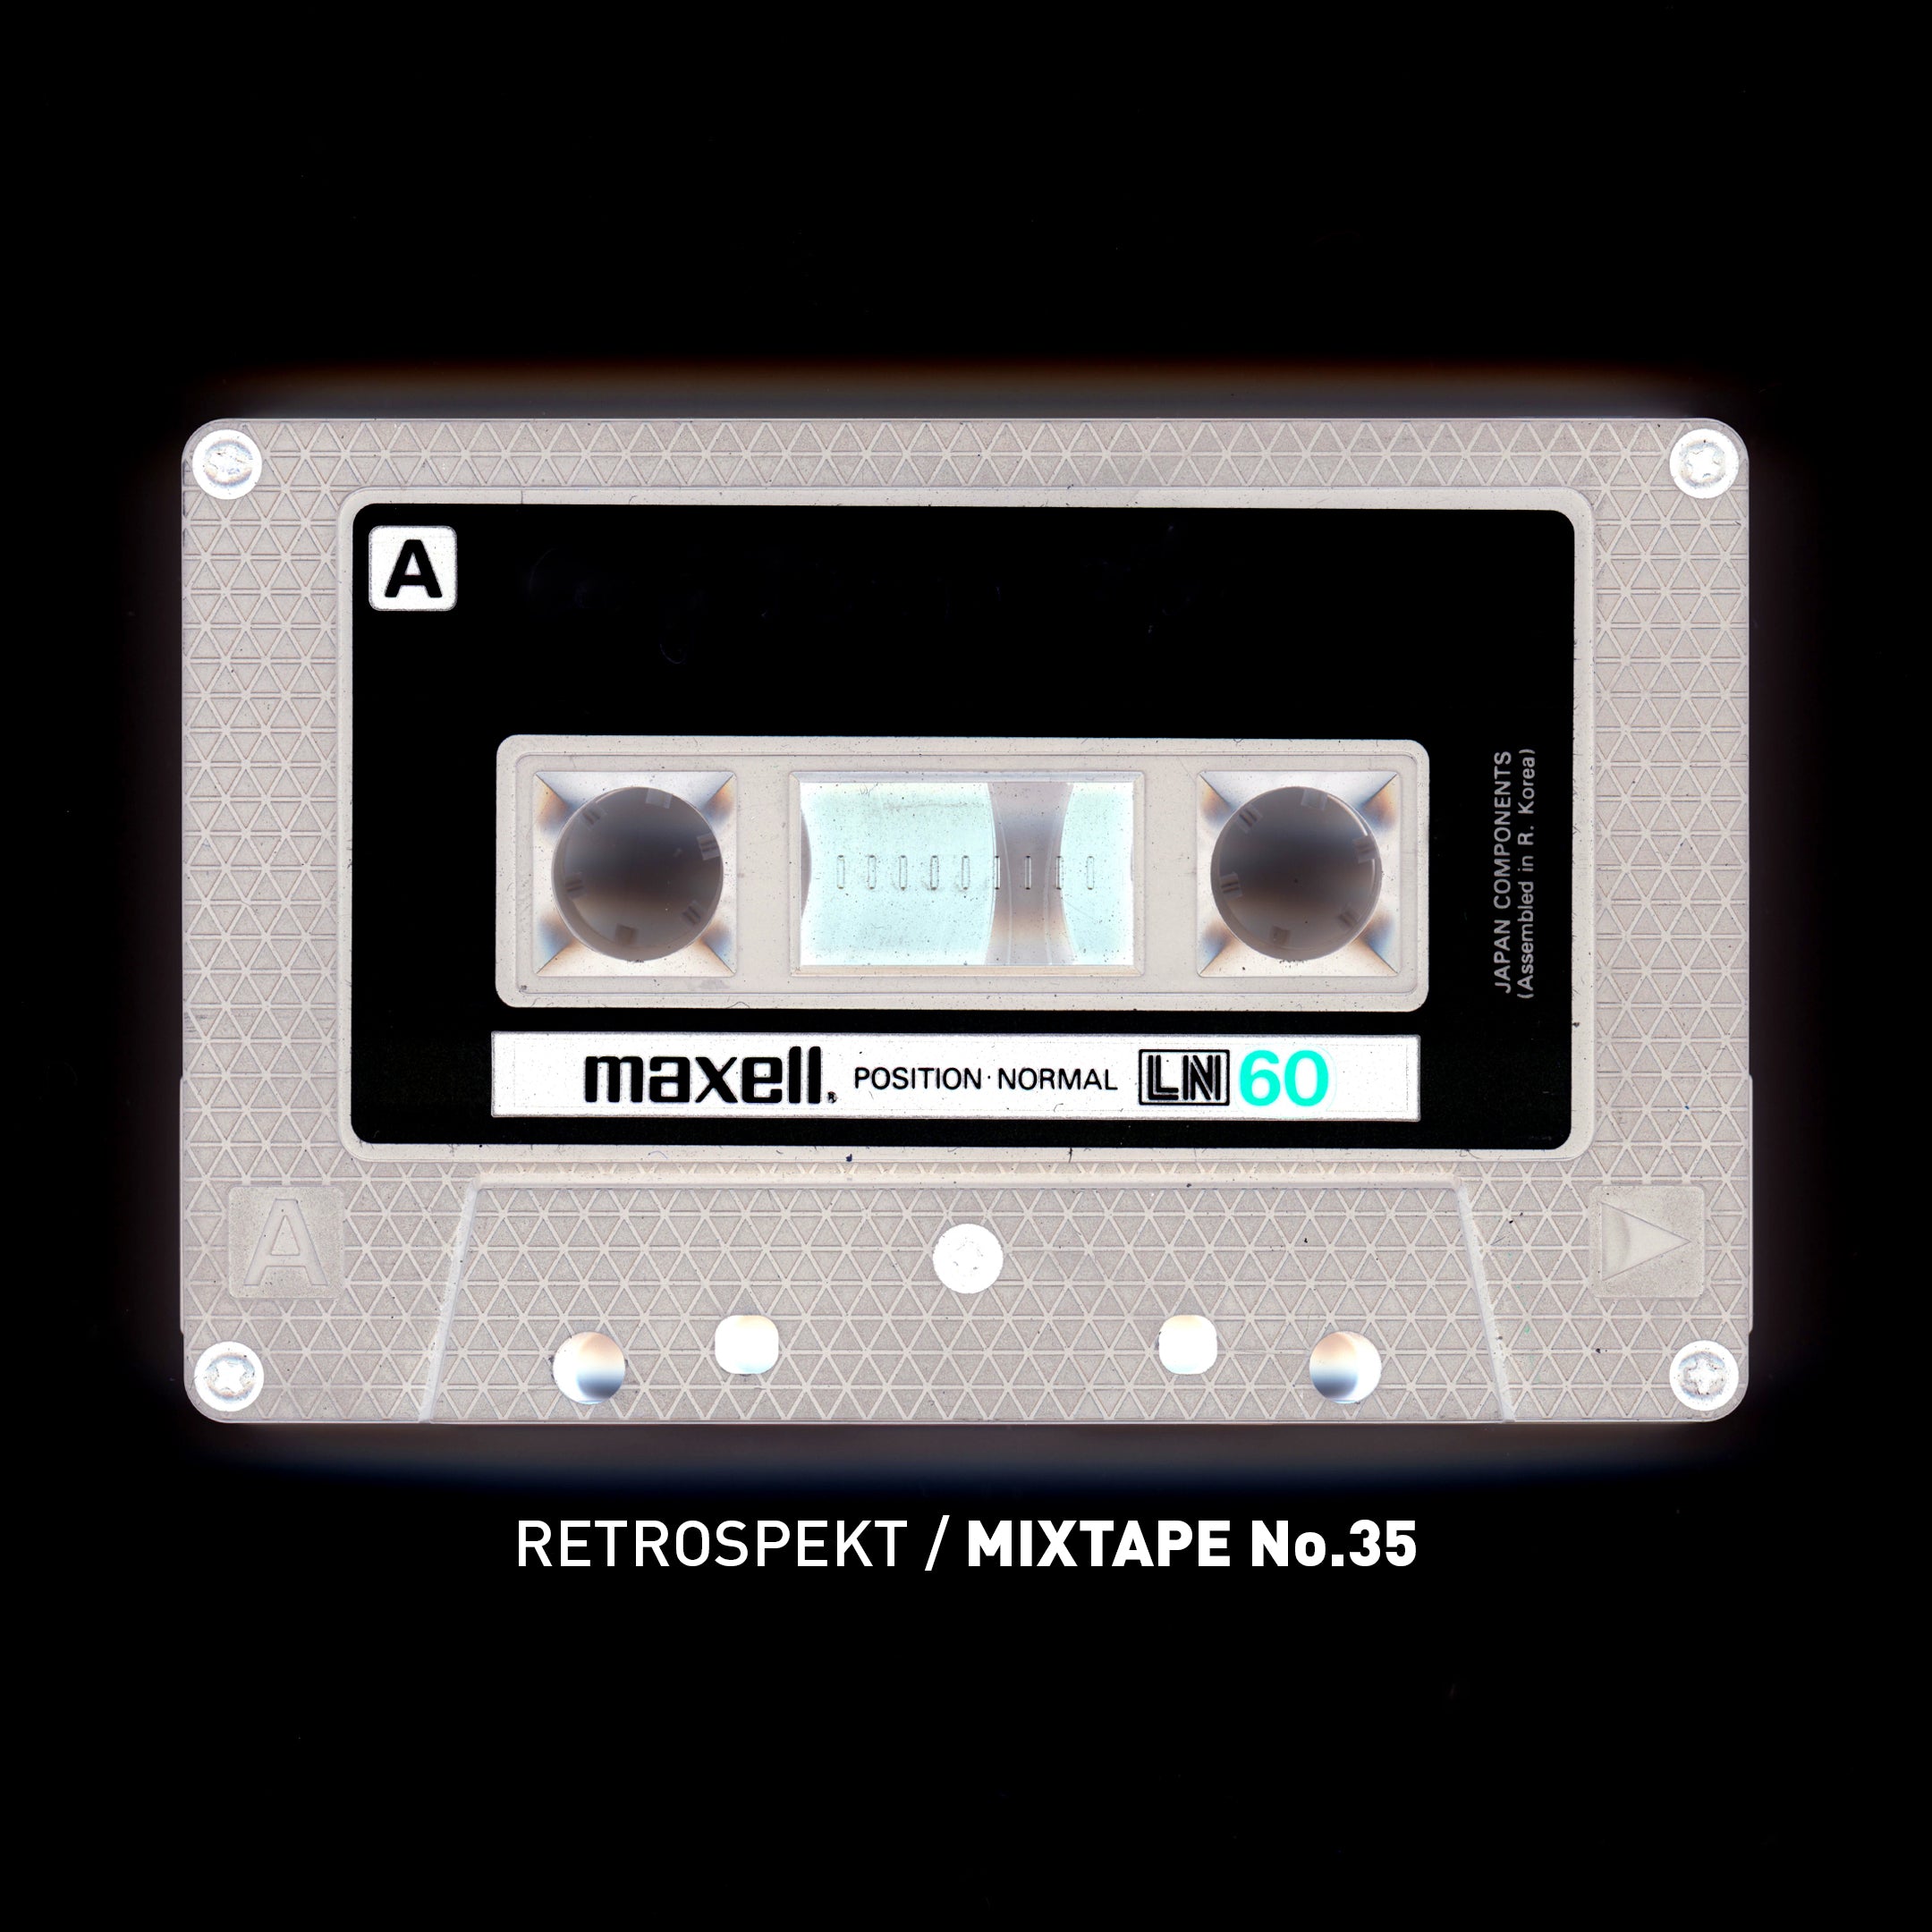 Retrospekt Mixtape No. 35